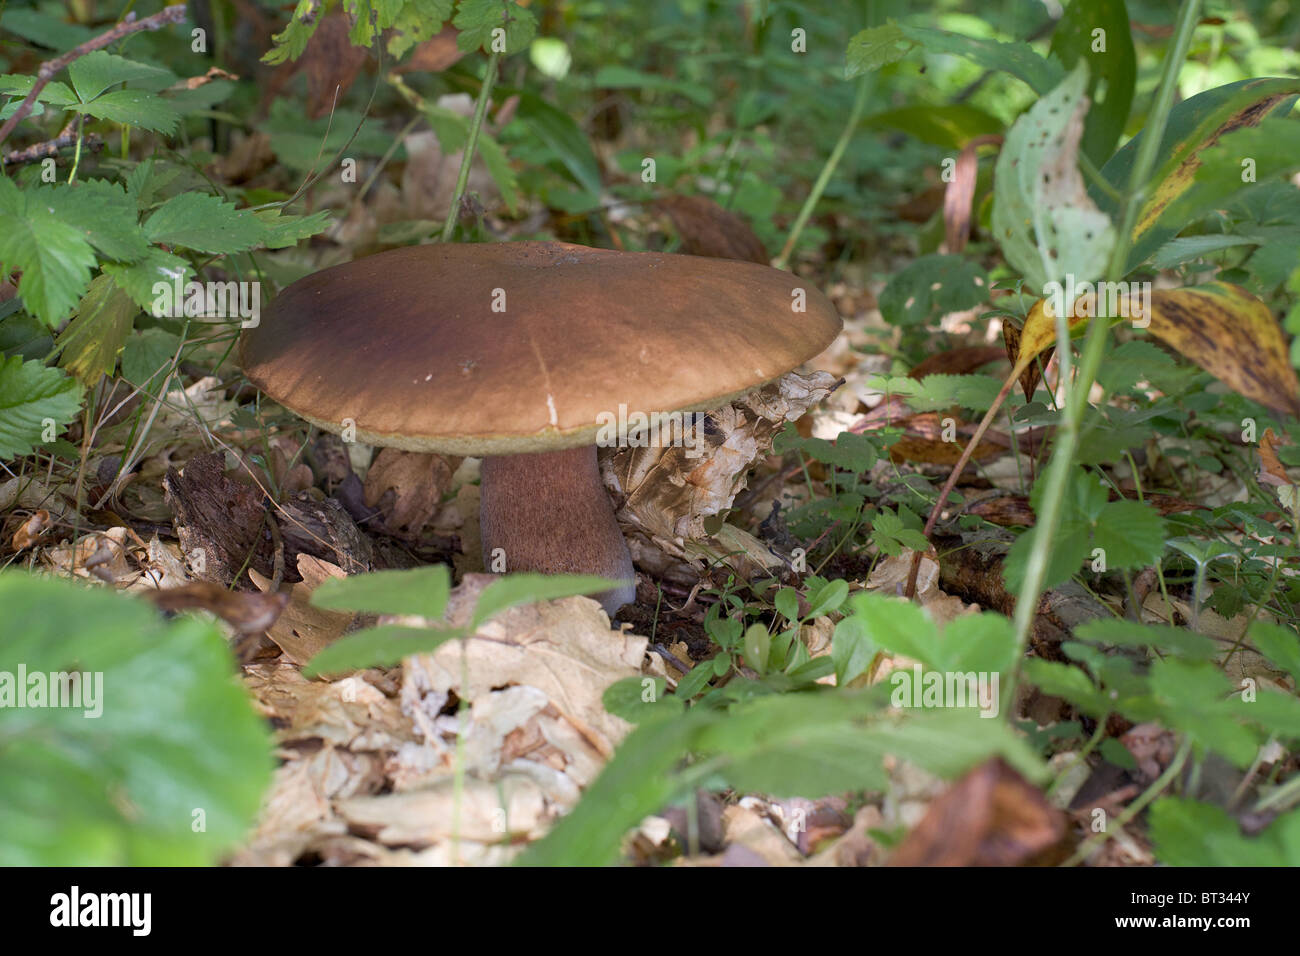 Big edible mushroom in wood, among a grass Stock Photo